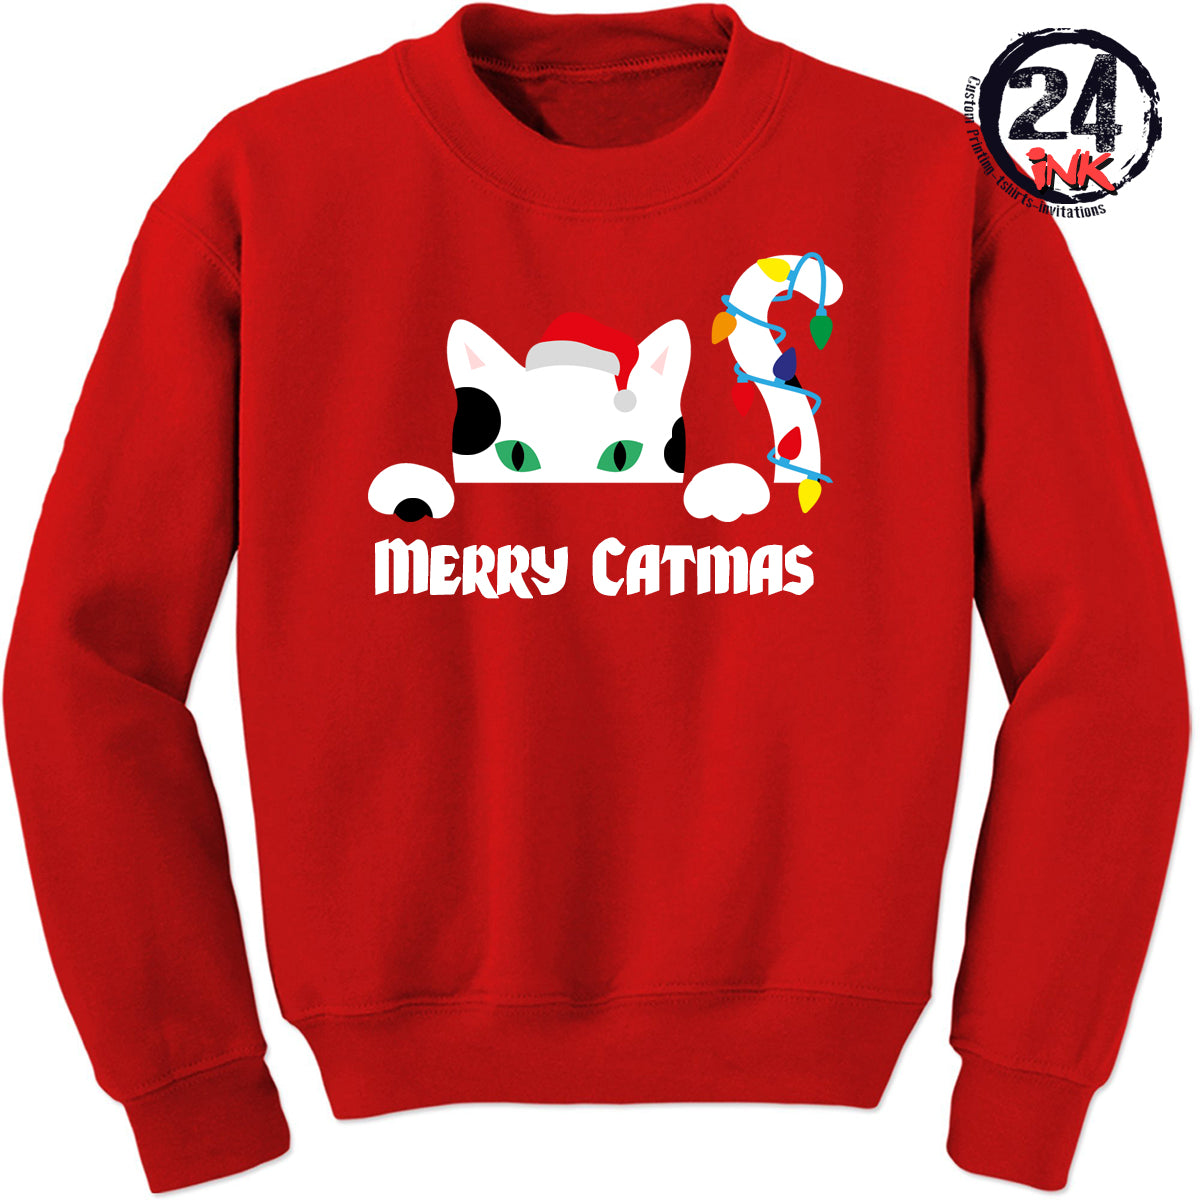 Merry Catmas non hooded sweatshirt